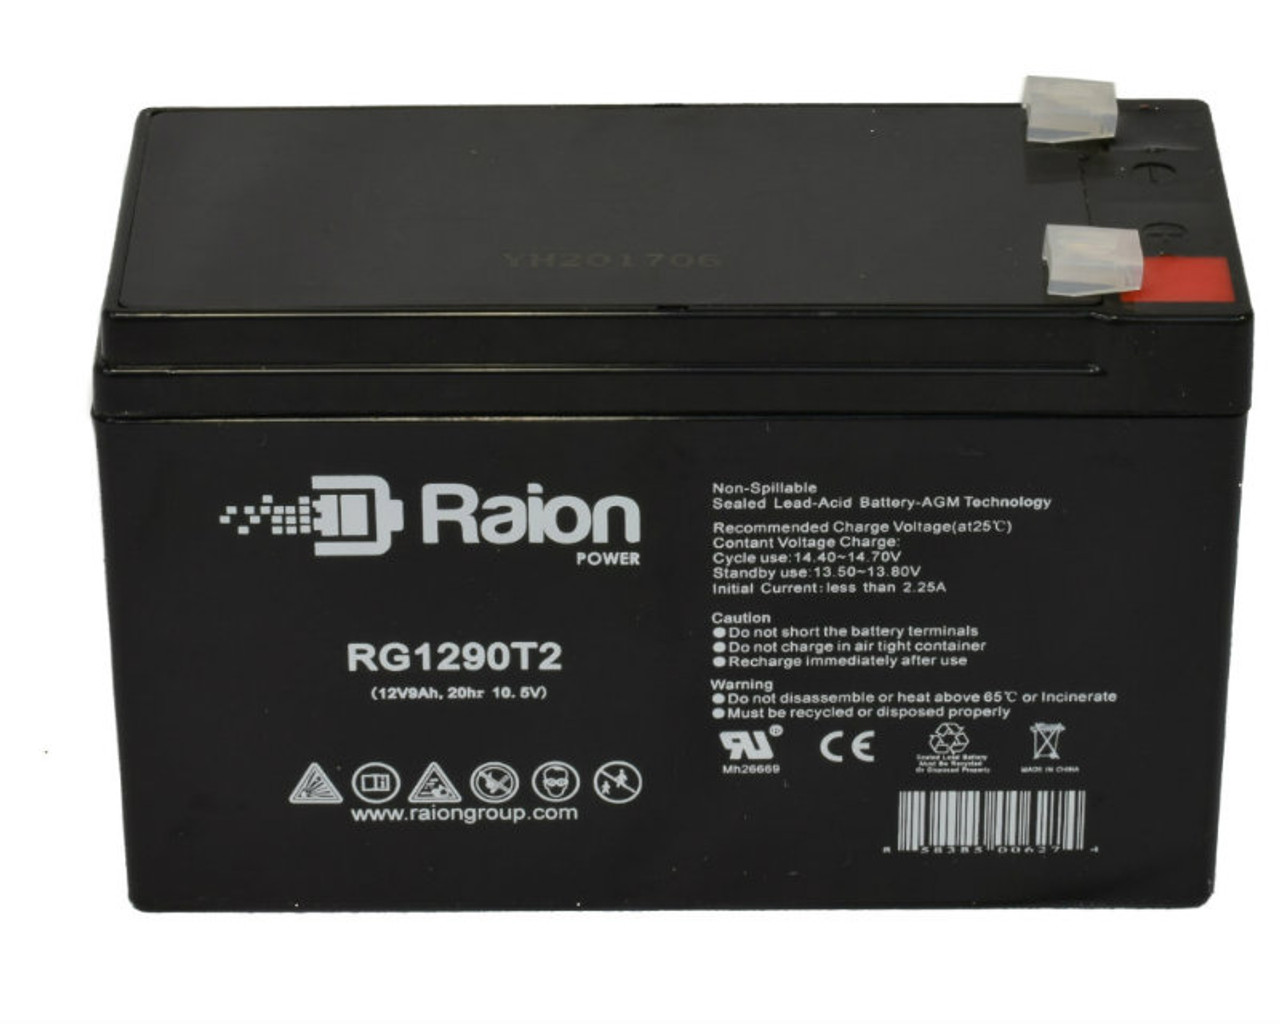 Raion Power RG1290T2 12V 9Ah Lead Acid Battery for Vision HP12-46W